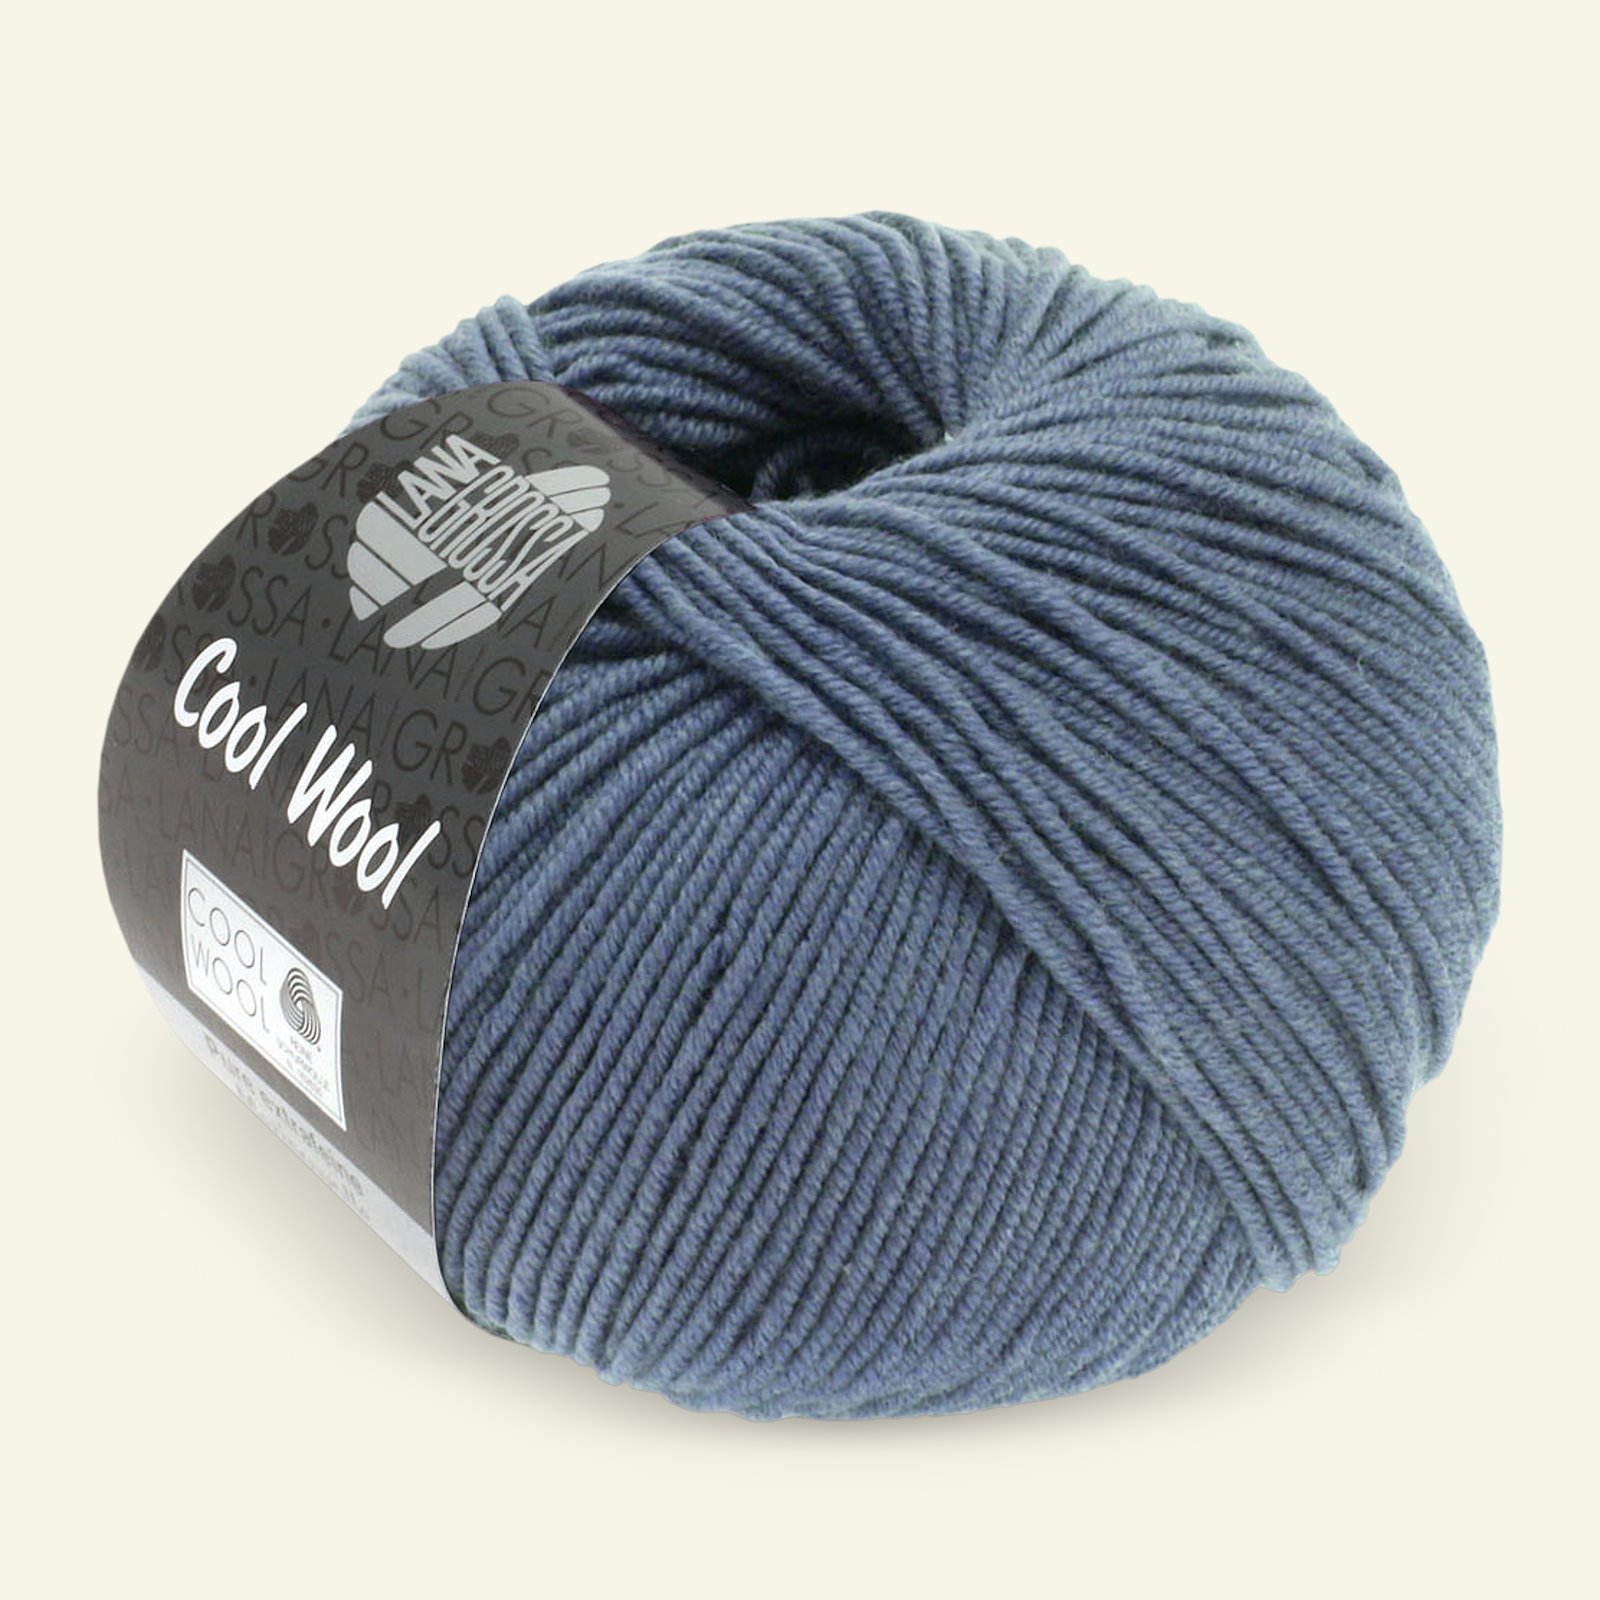 Lana Grossa, extrafine merino wool yarn "Cool Wool", greyblue 90001122_pack